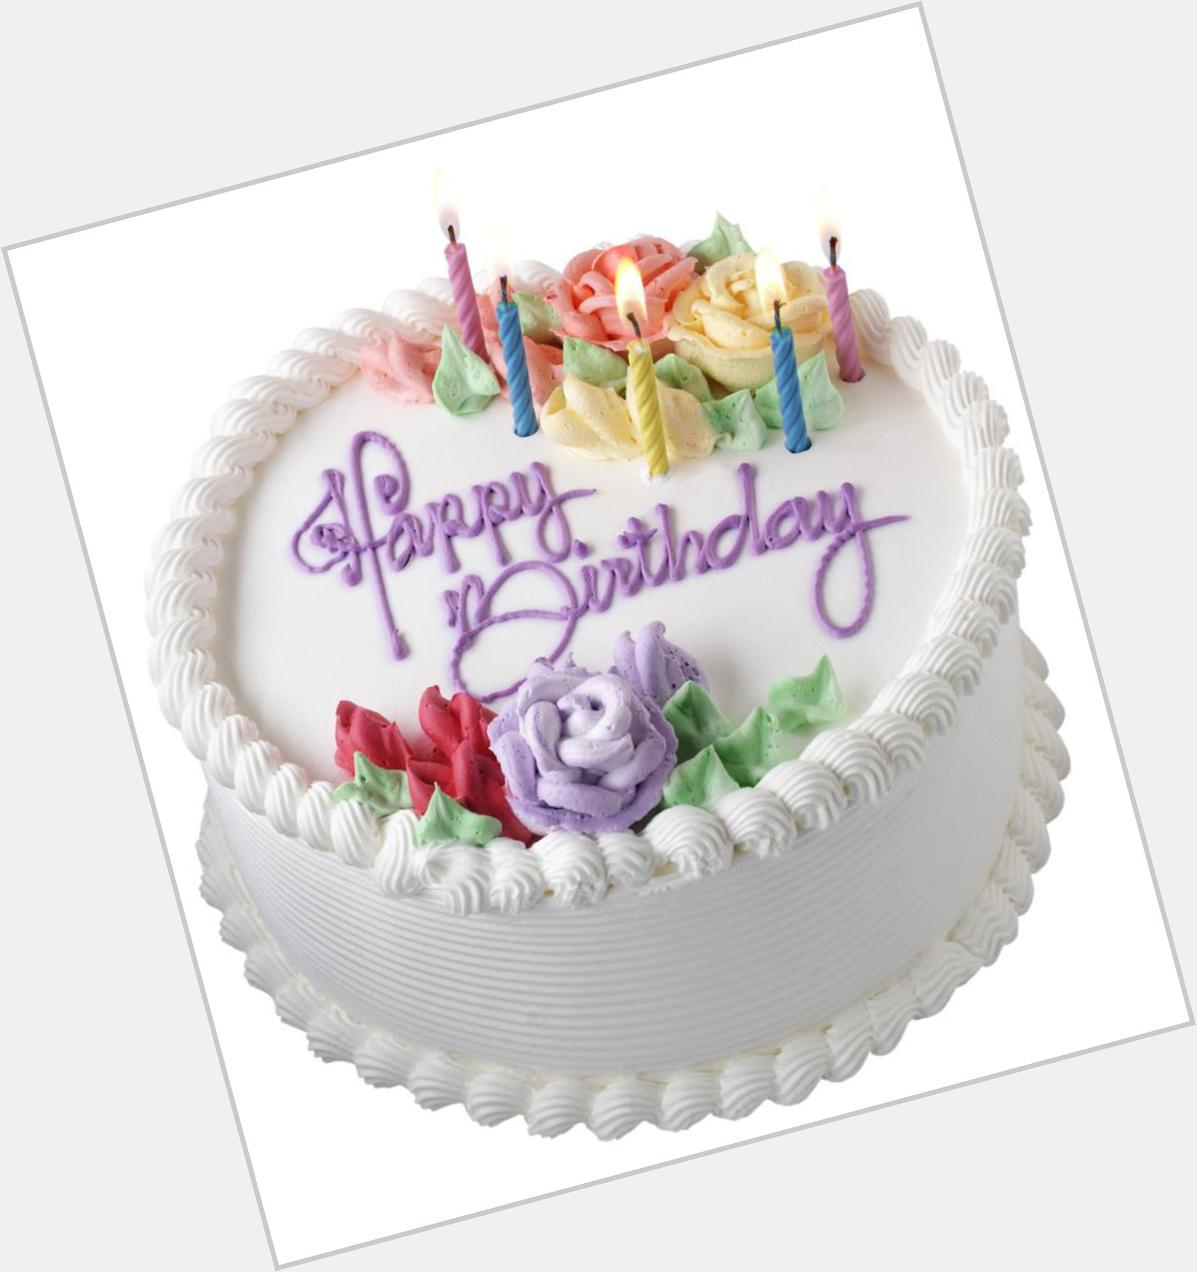 Happy Birthday Jerome Boateng we wish u lot of sucess,joy n happiness may ur dreams came true  